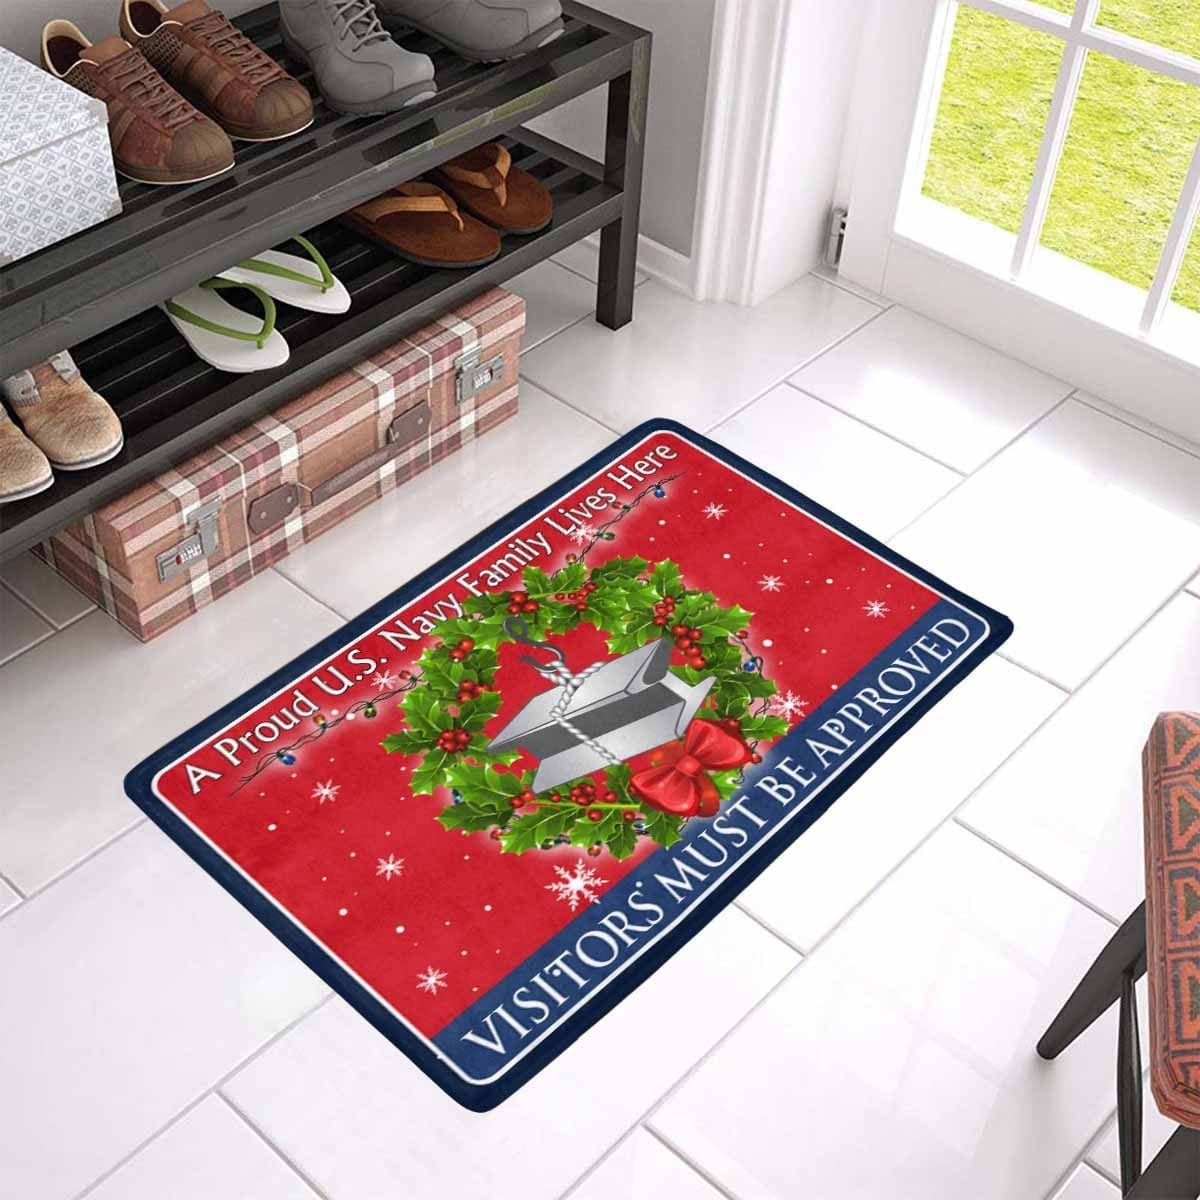 Navy Steelworker Navy SW - Visitors must be approved - Christmas Doormat-Doormat-Navy-Rate-Veterans Nation